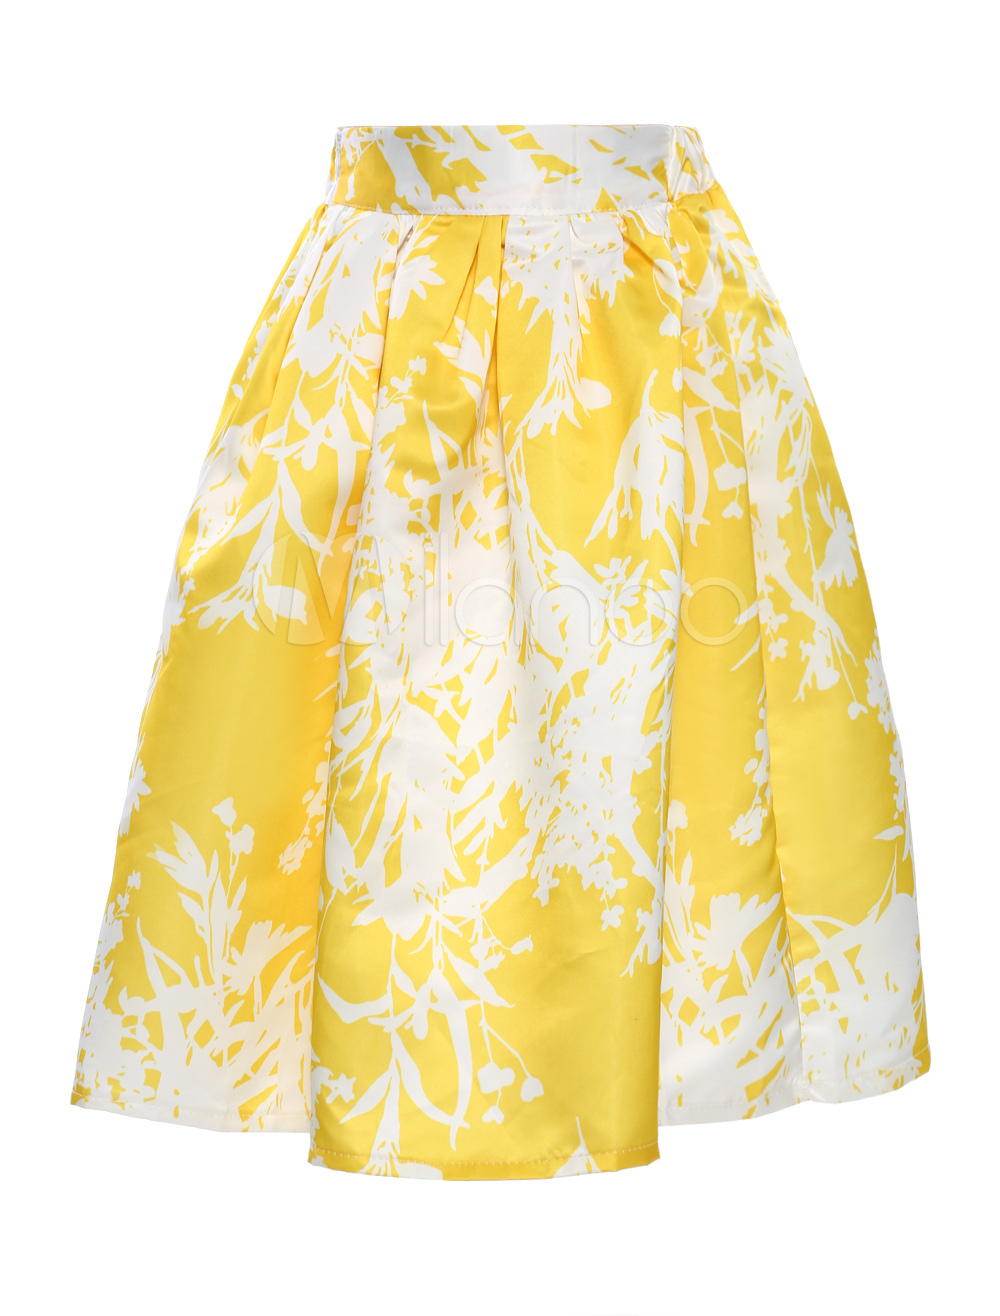 Yellow Printed Short Polyester Cute Skirt For Women - Milanoo.com